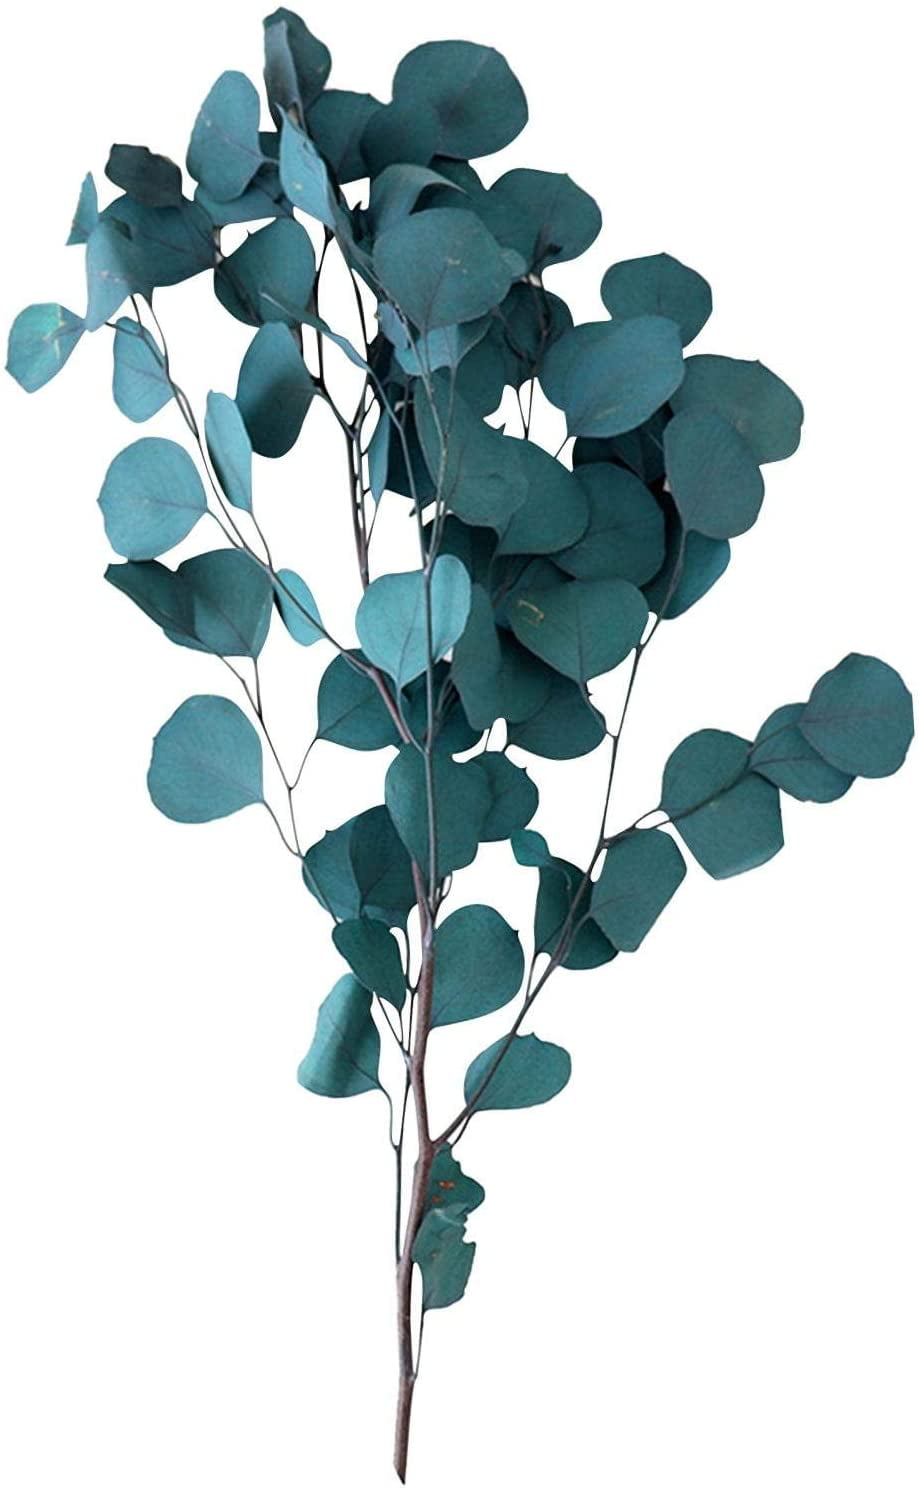 5 Pcs Dried Flower Natural Eucalyptus Branches Plants Eternal Leaves Home Decor 